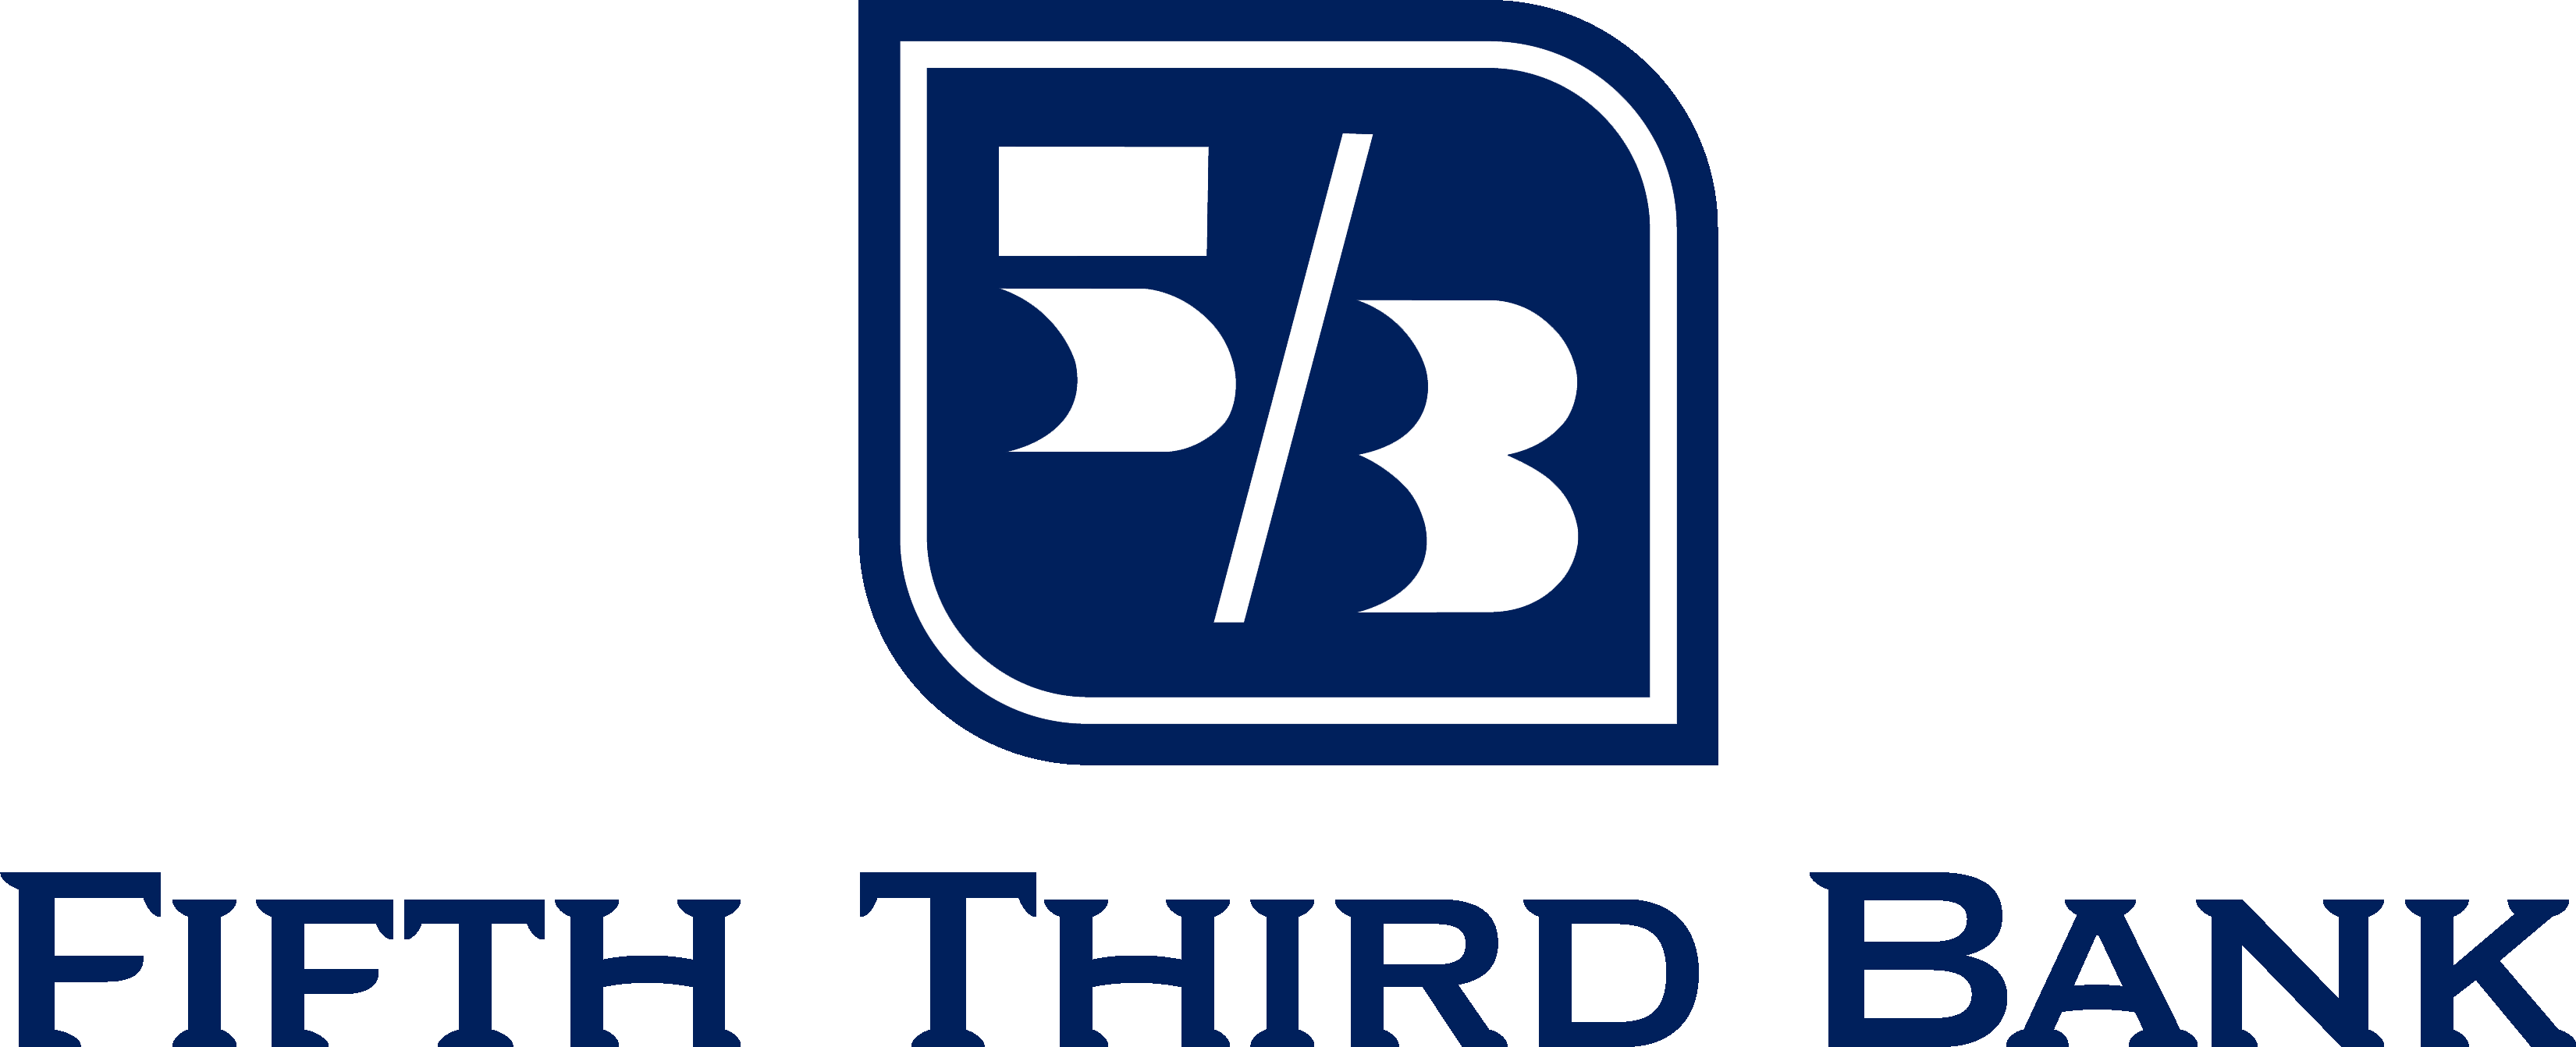 fifth_third_bank_logo.png